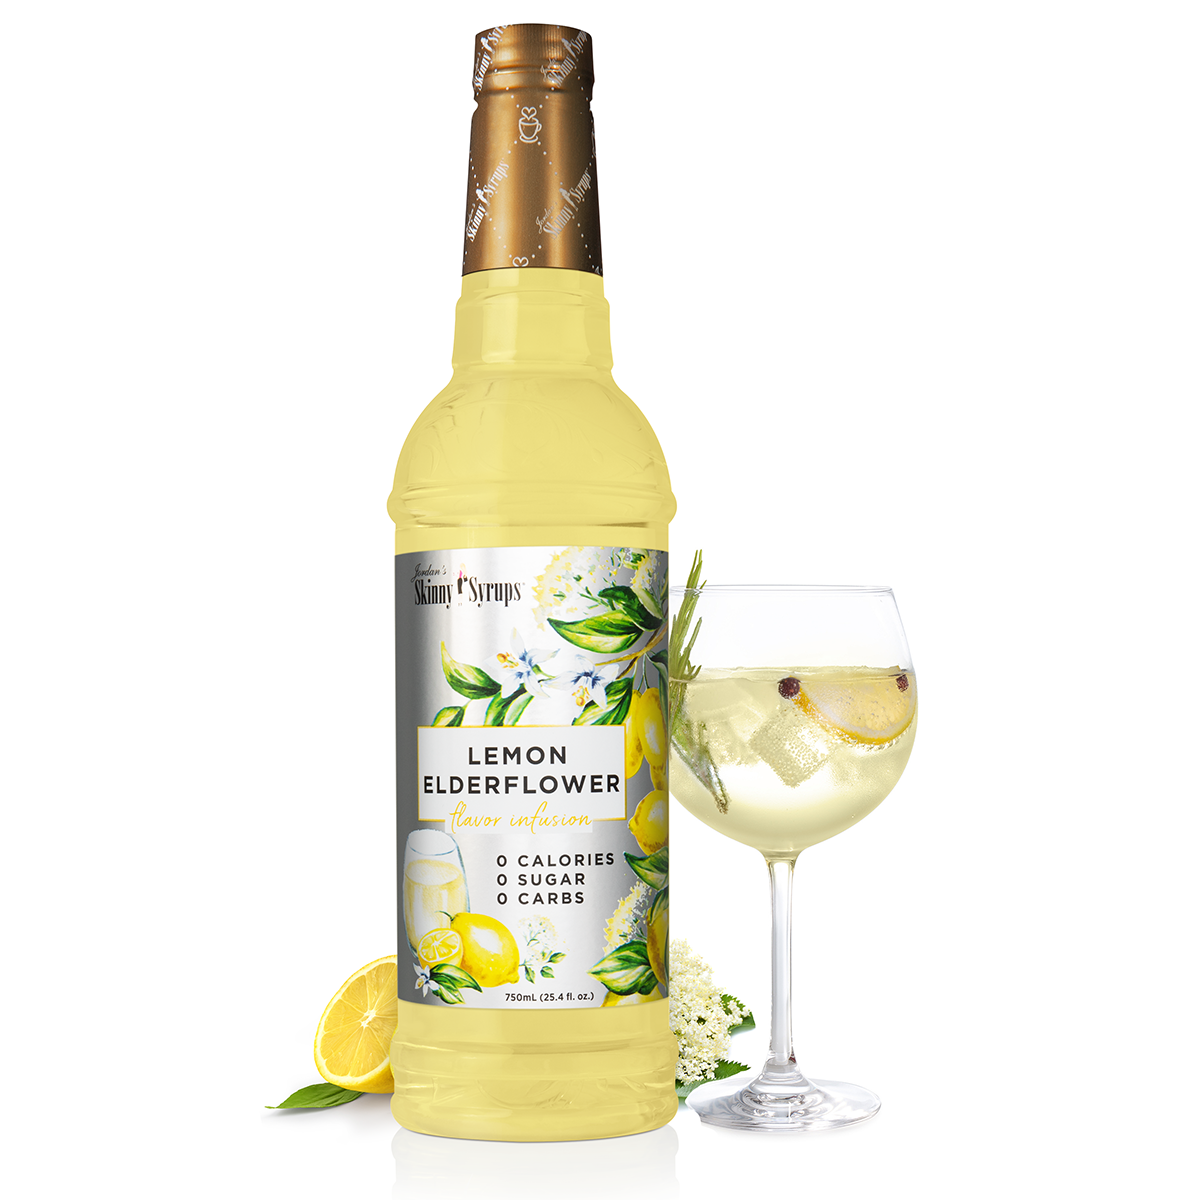 Lemon Elderflower Flavor Infusion Syrup